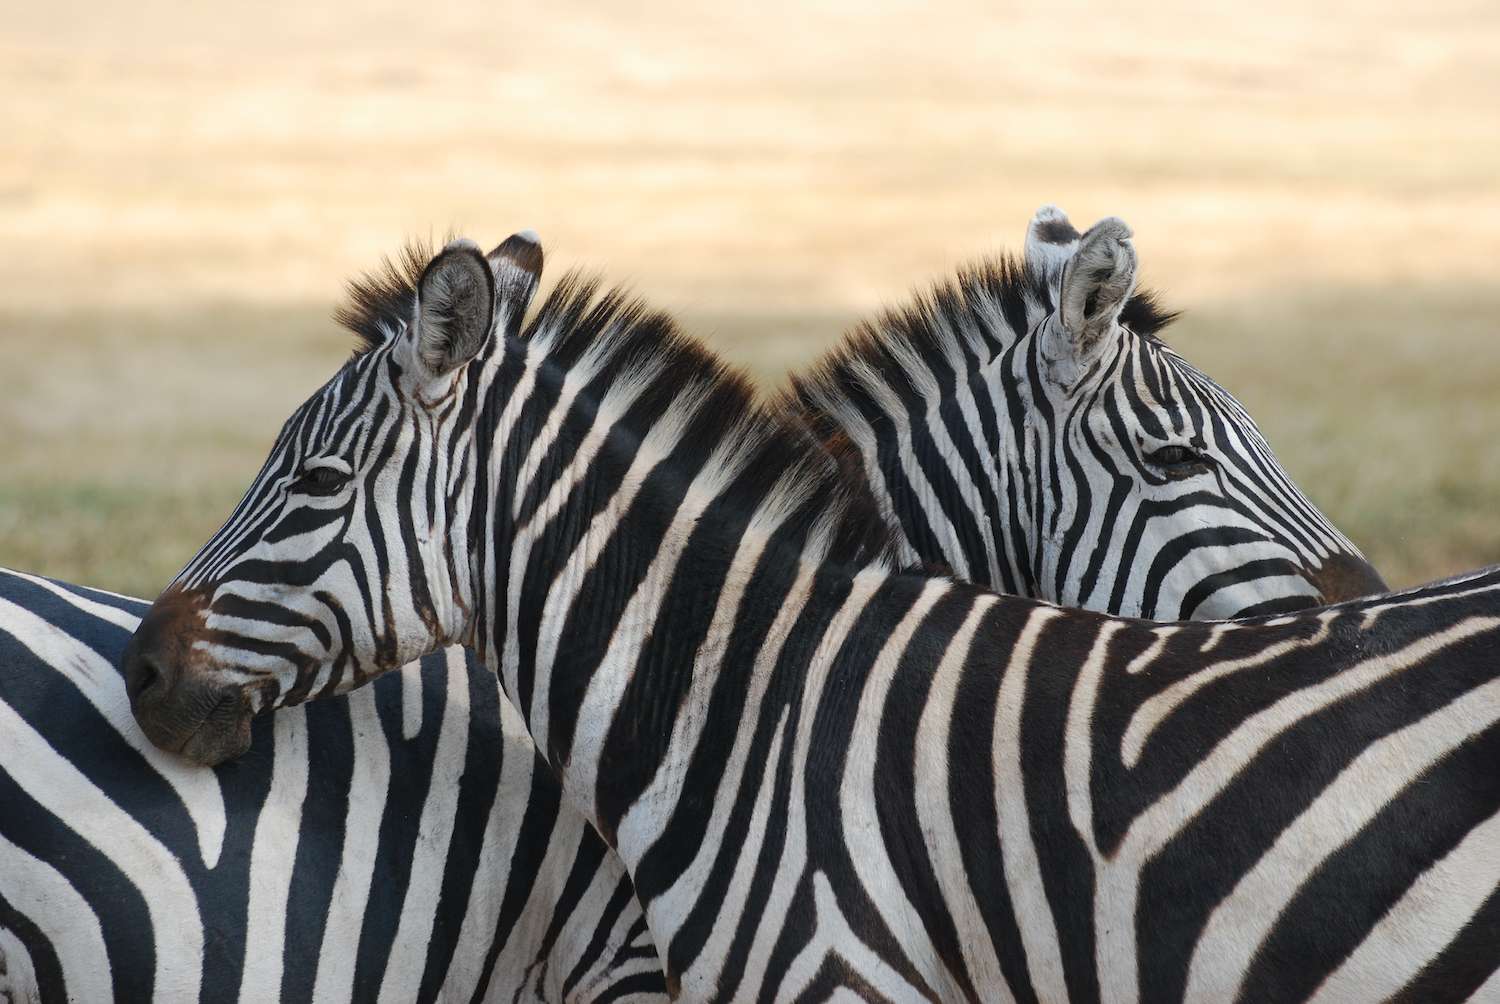 Two Zebras in Tanzania. 